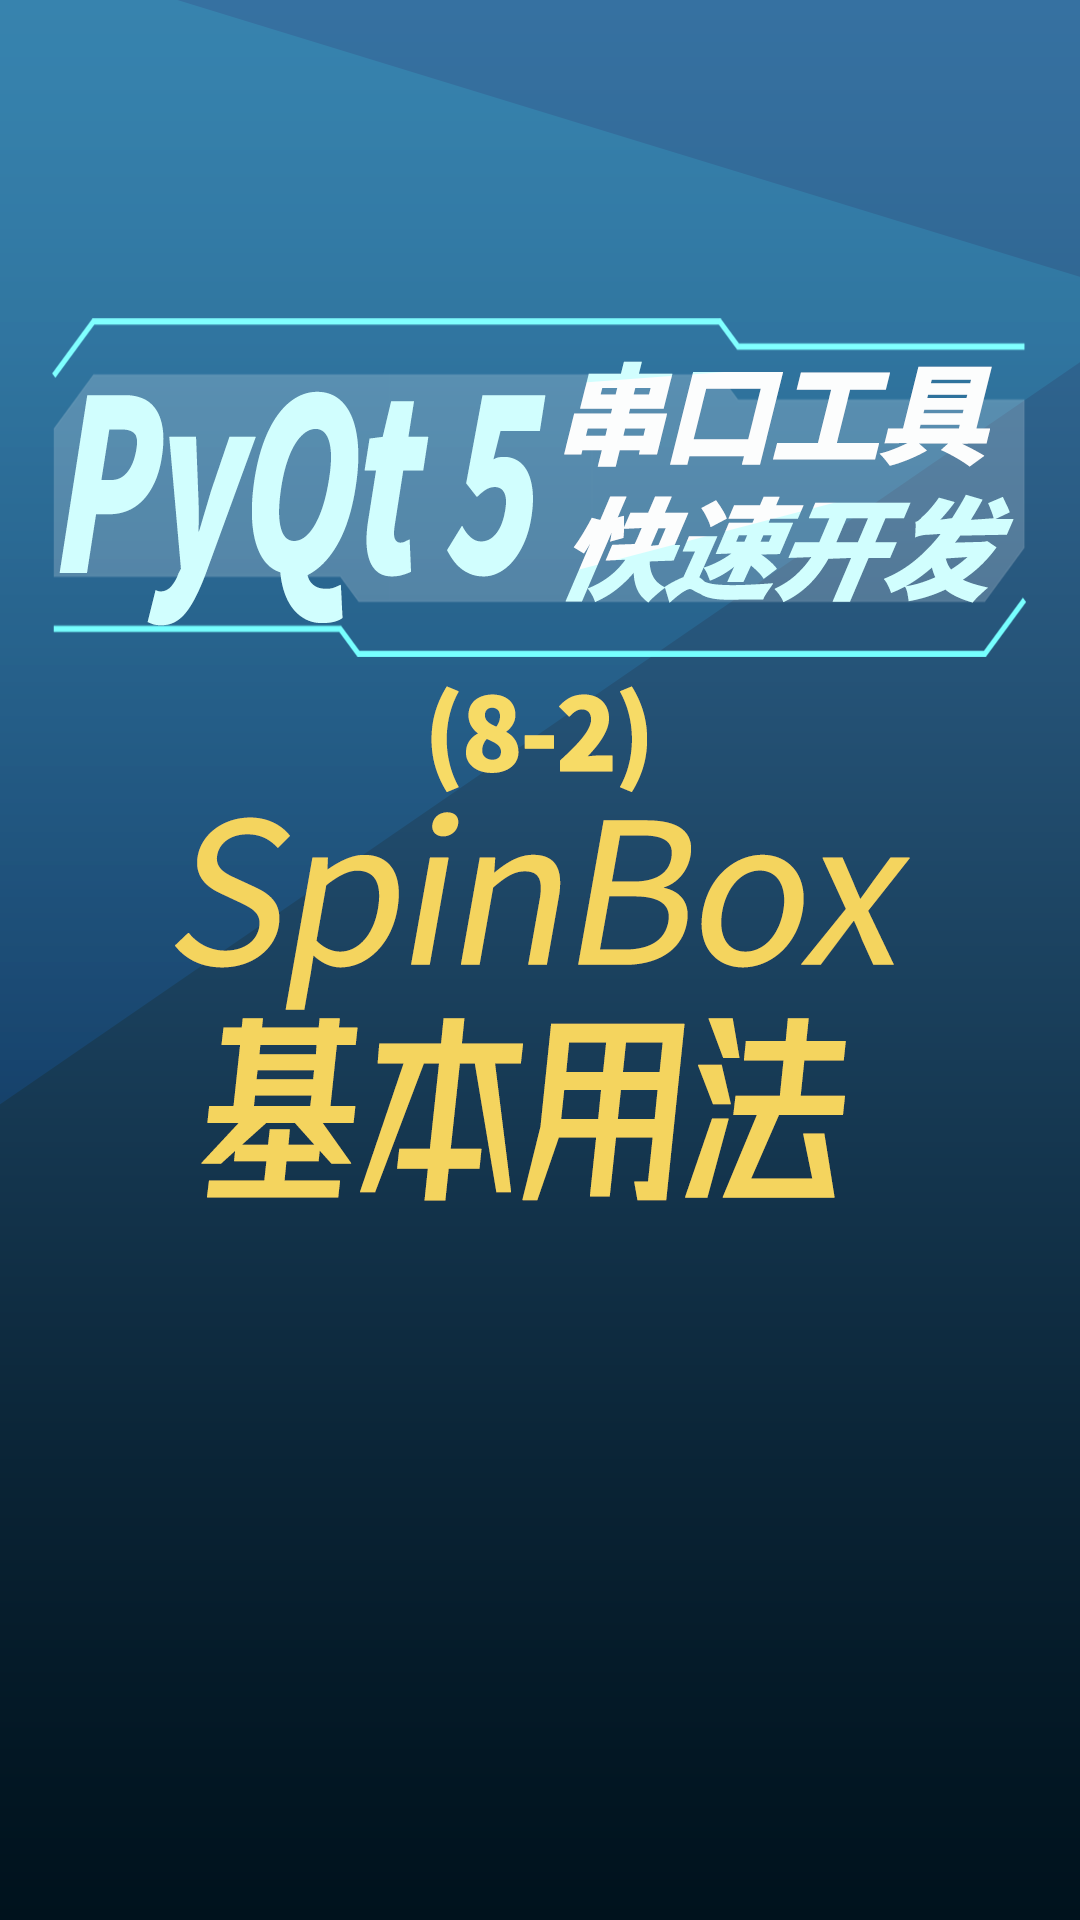 pyqt5串口工具快速开发8-2spinBox基本用法#串口工具开发 